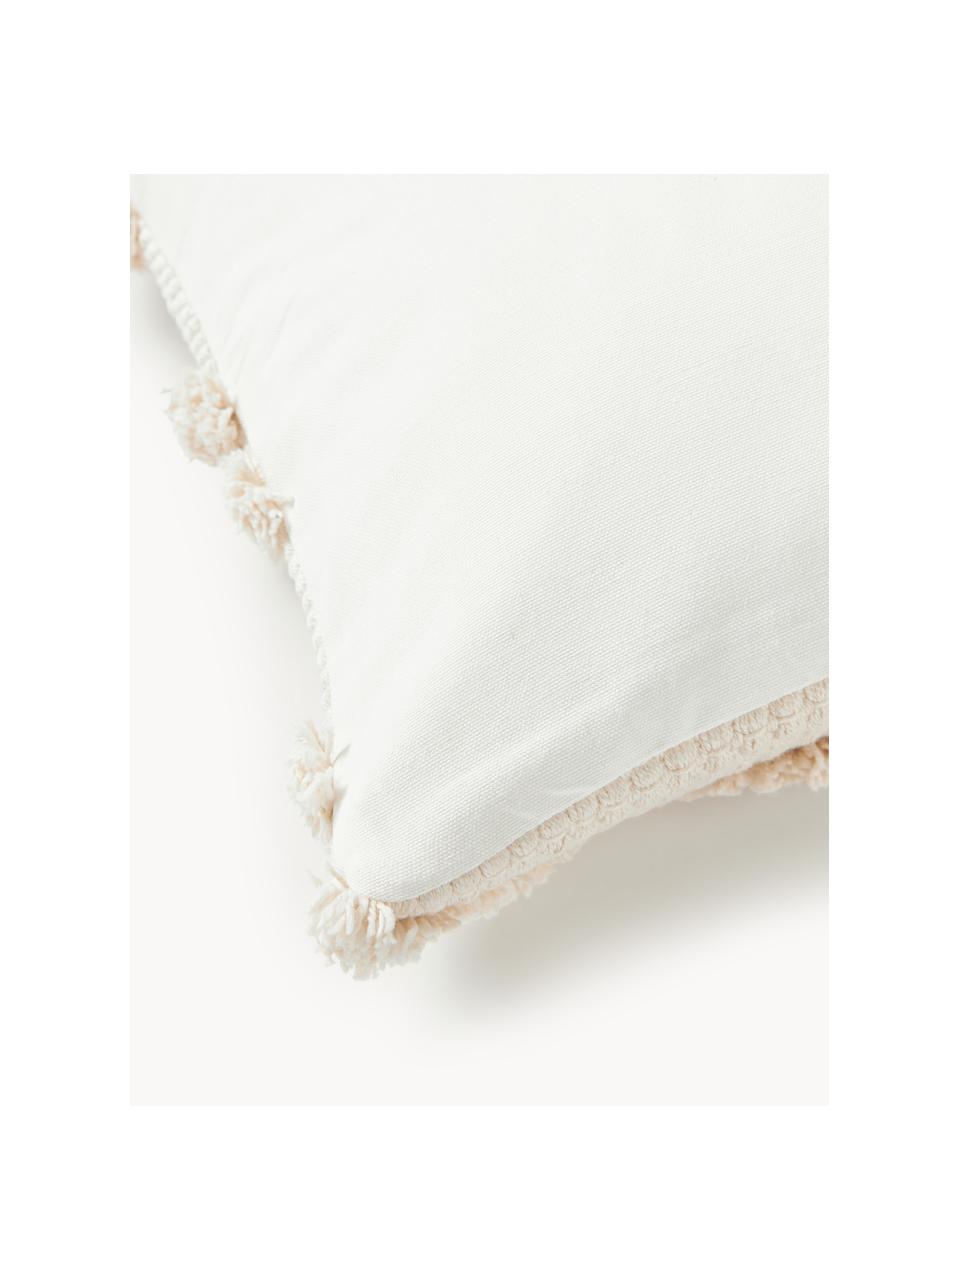 Coperta fatta a mano in lana grossa con frange Belen, Bianco latte, Larg. 130 x Lung. 170 cm